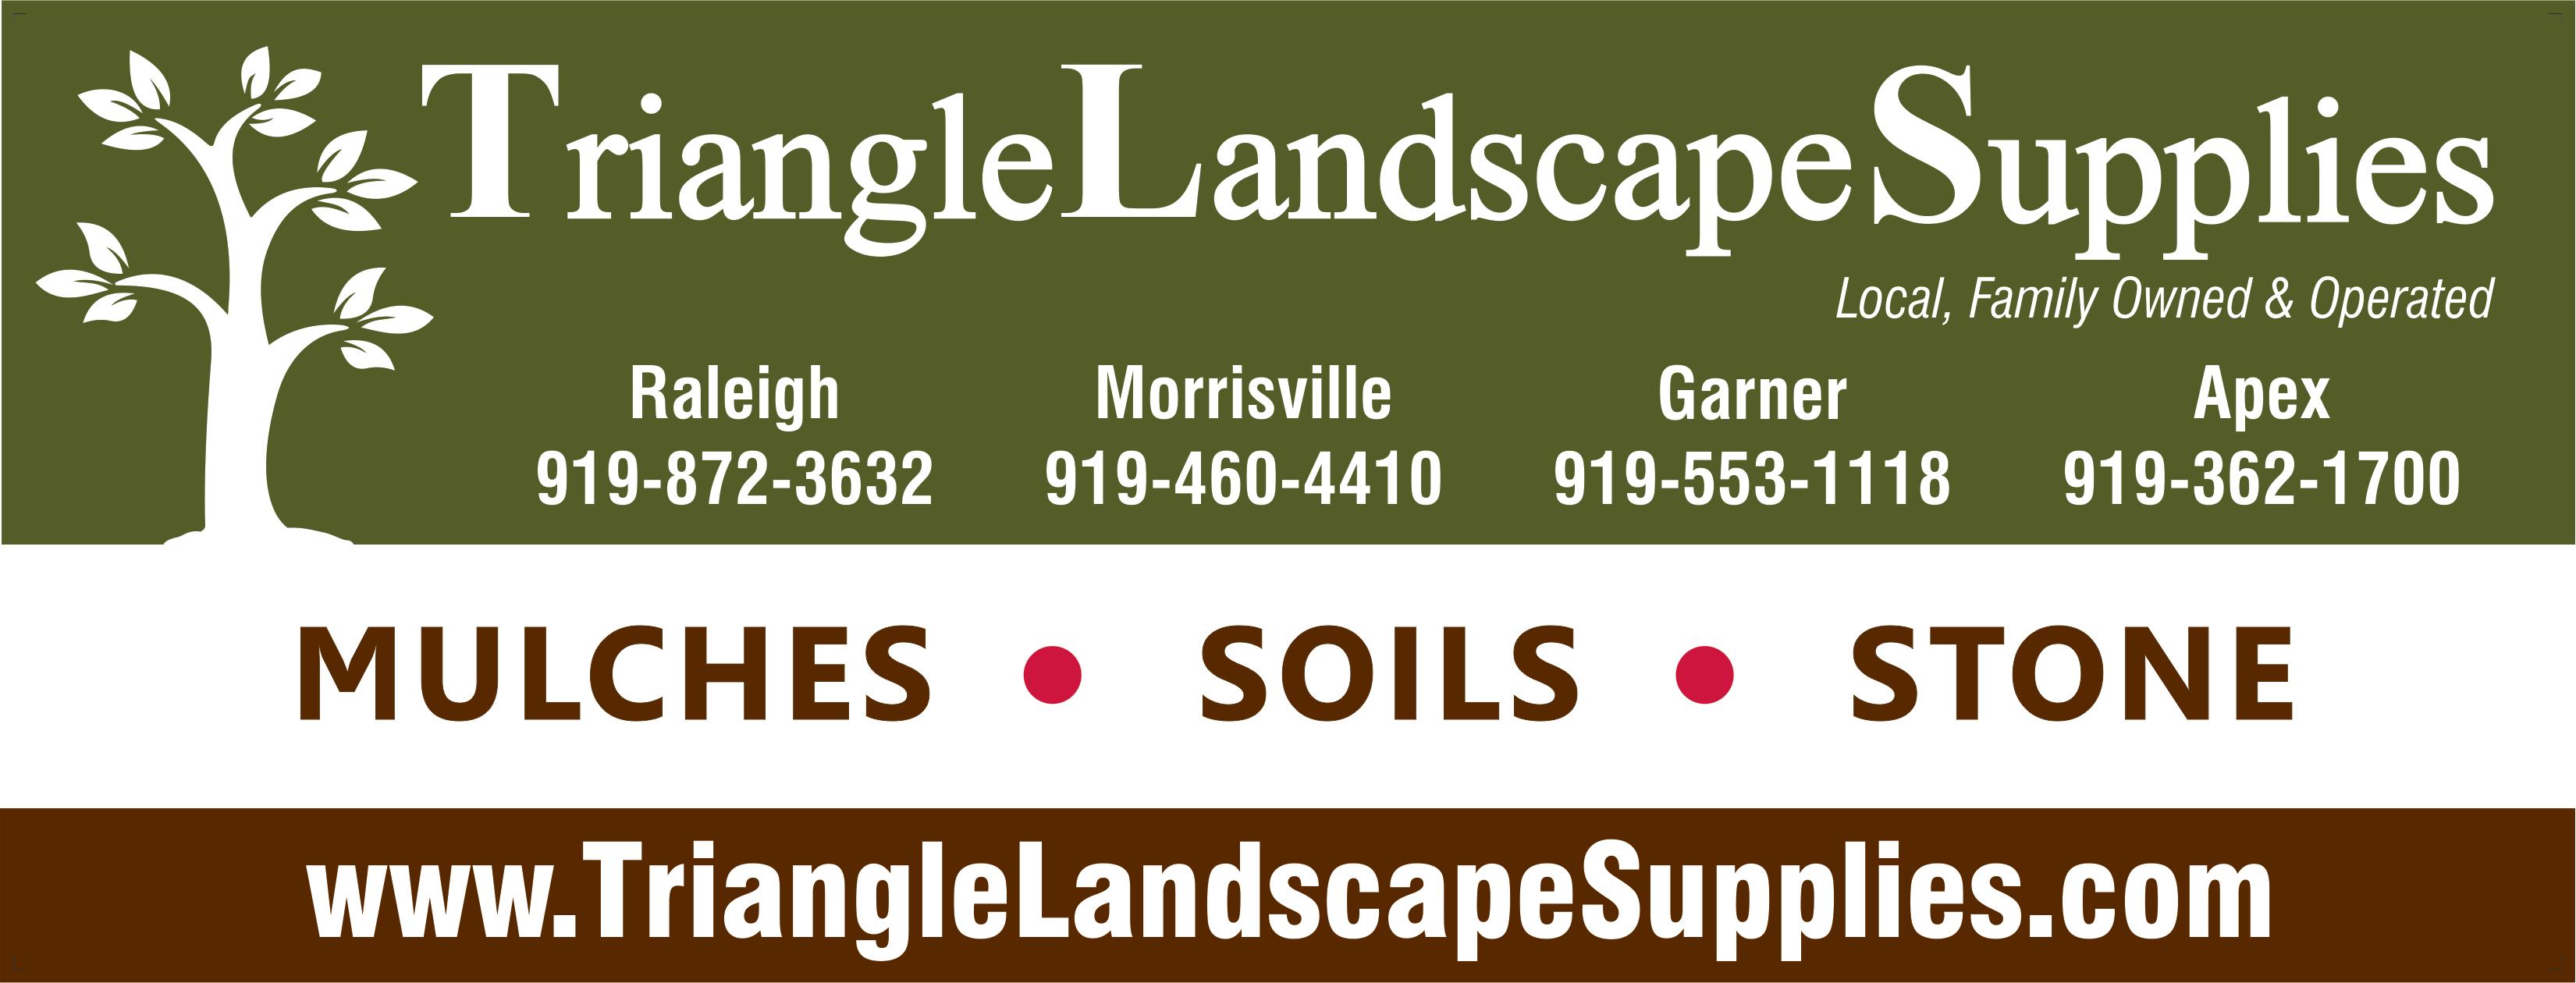 Triangle Landscape Supplies, Morrisville Photo